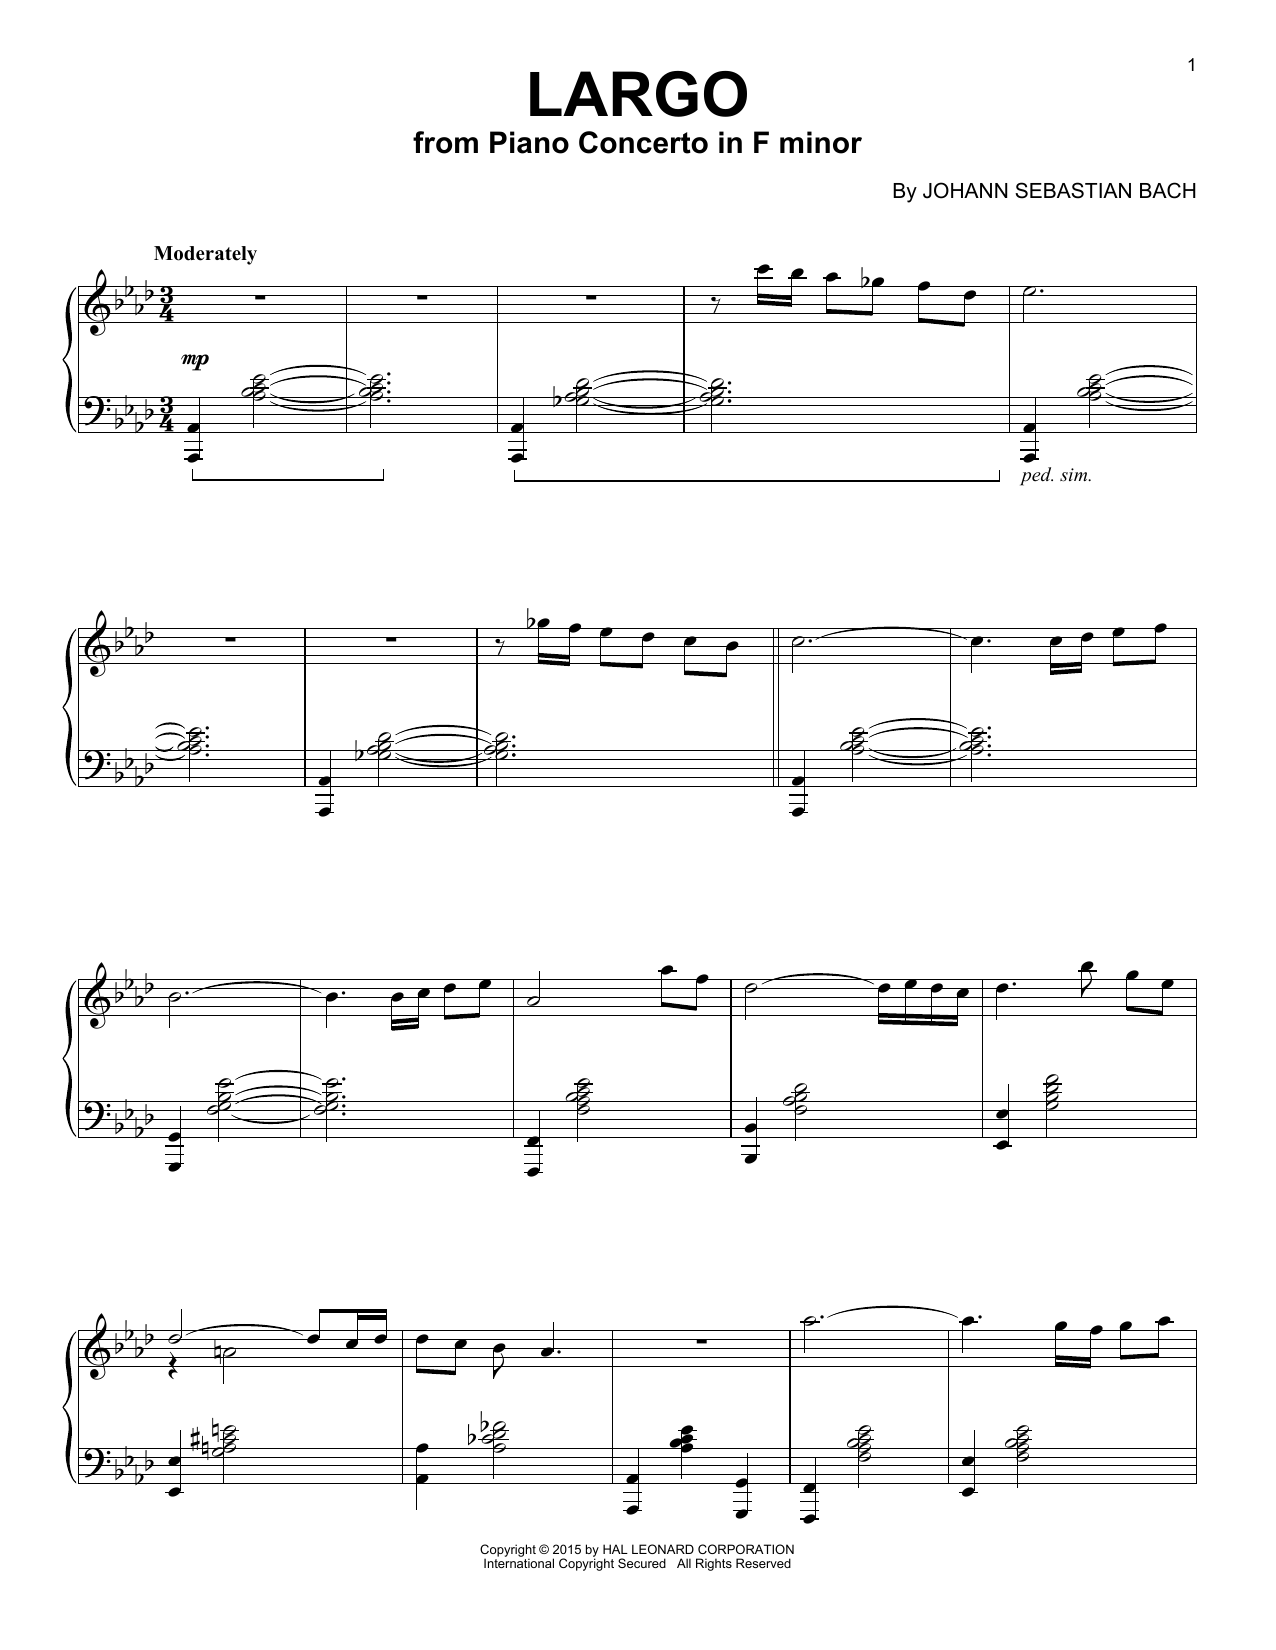 Johann Sebastian Bach Largo [Jazz version] Sheet Music Notes & Chords for Piano - Download or Print PDF